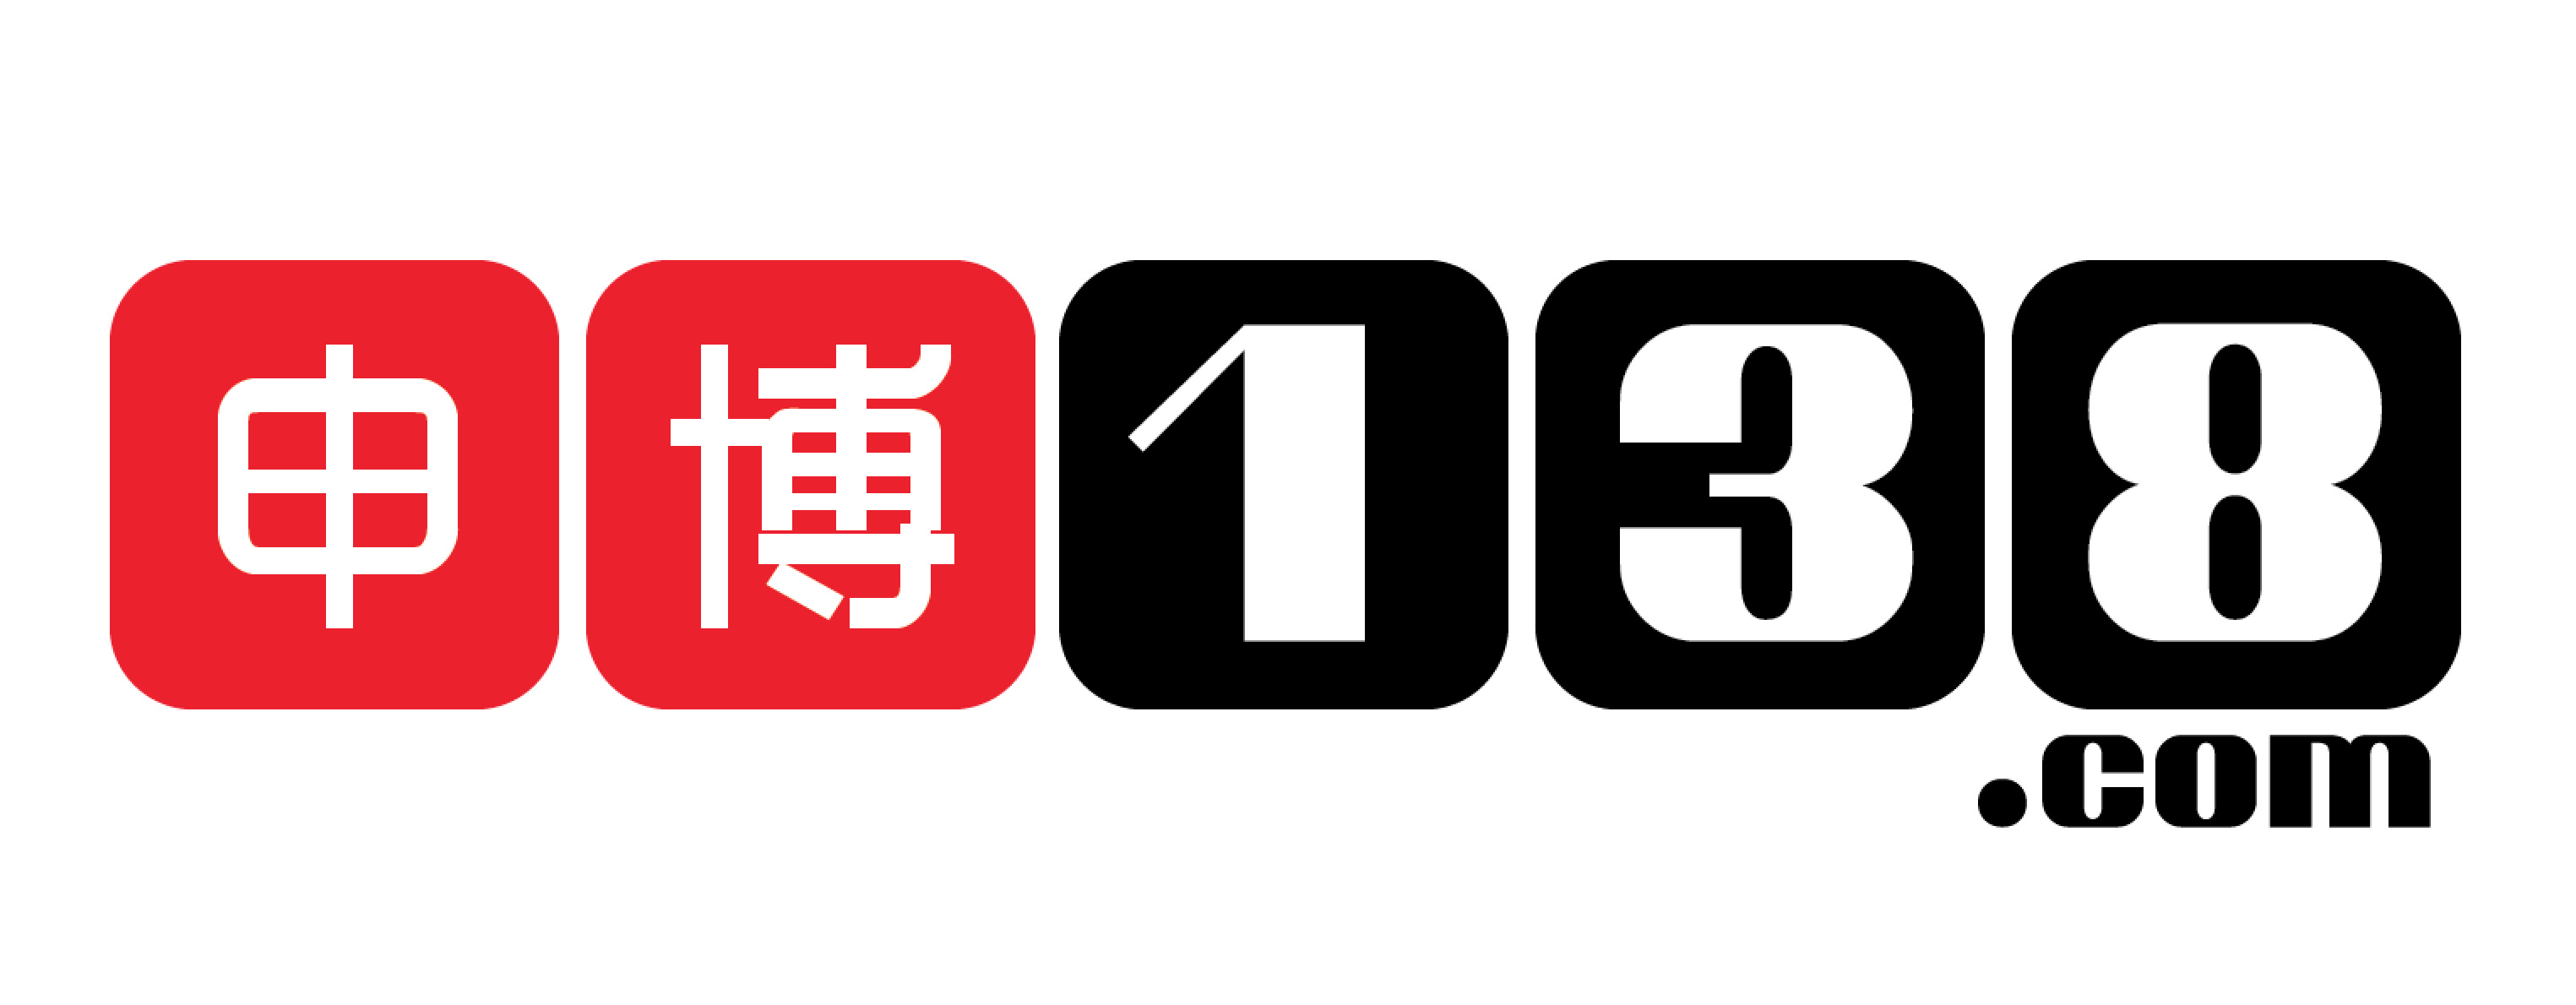 138.com ロゴ